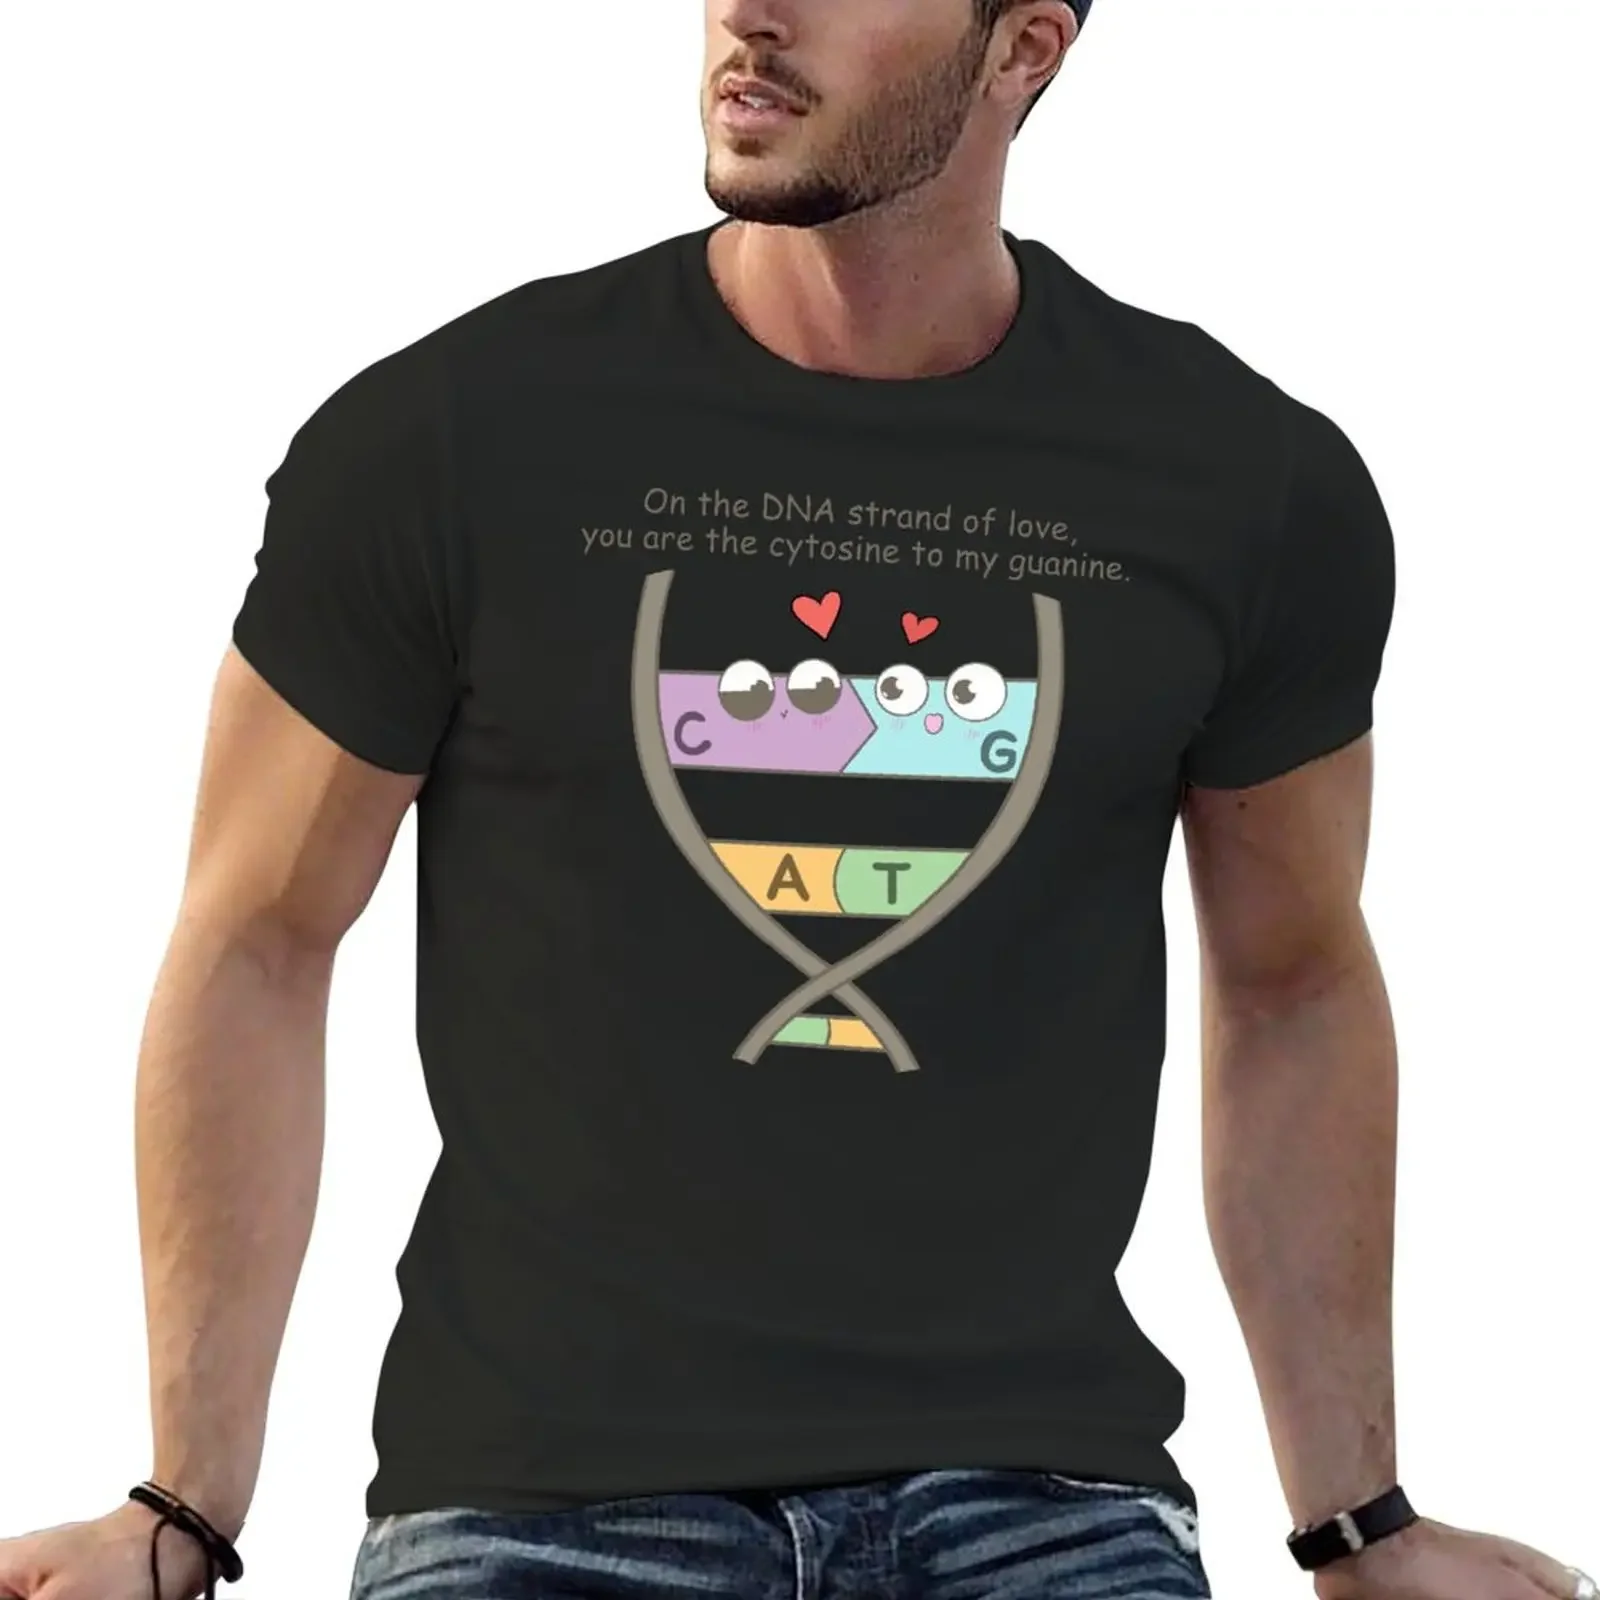 Camiseta de DNA Strand of Love para hombre, diseño de aduanas, camisetas bonitas, camisetas gráficas divertidas